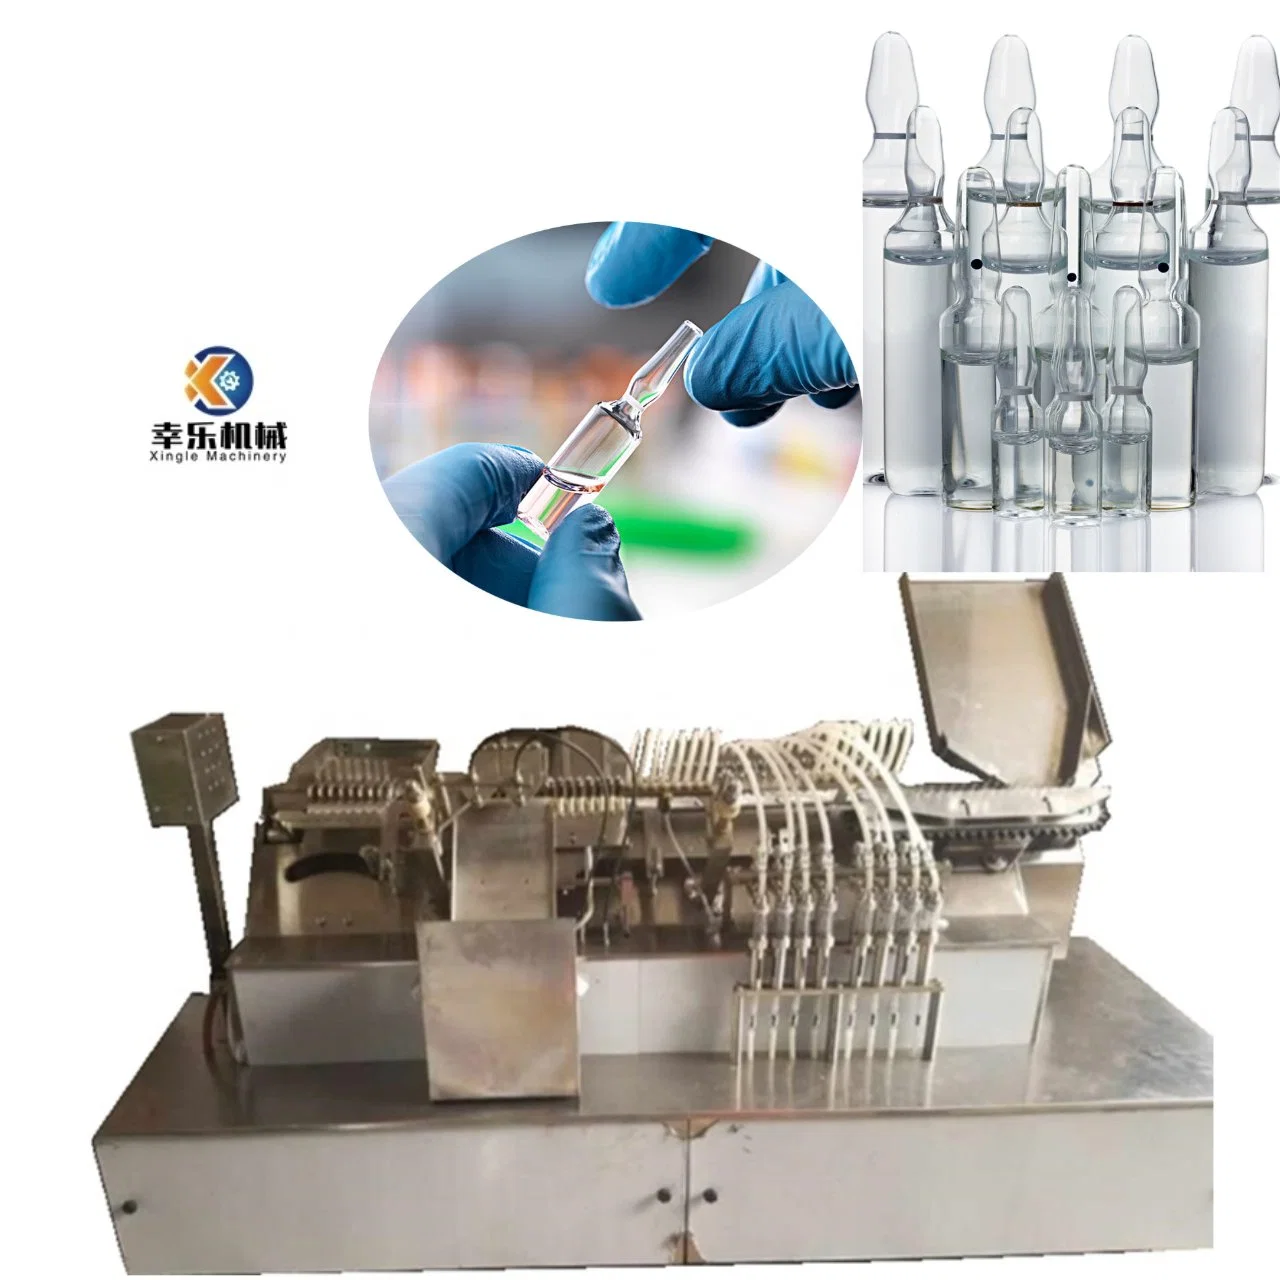 Automatic Glass Ampoule Filling Sealing Machine Oral Liquid Filling and Sealing Machine Disinfection Sanitizer Bottle Filler Ampoule Making Machine